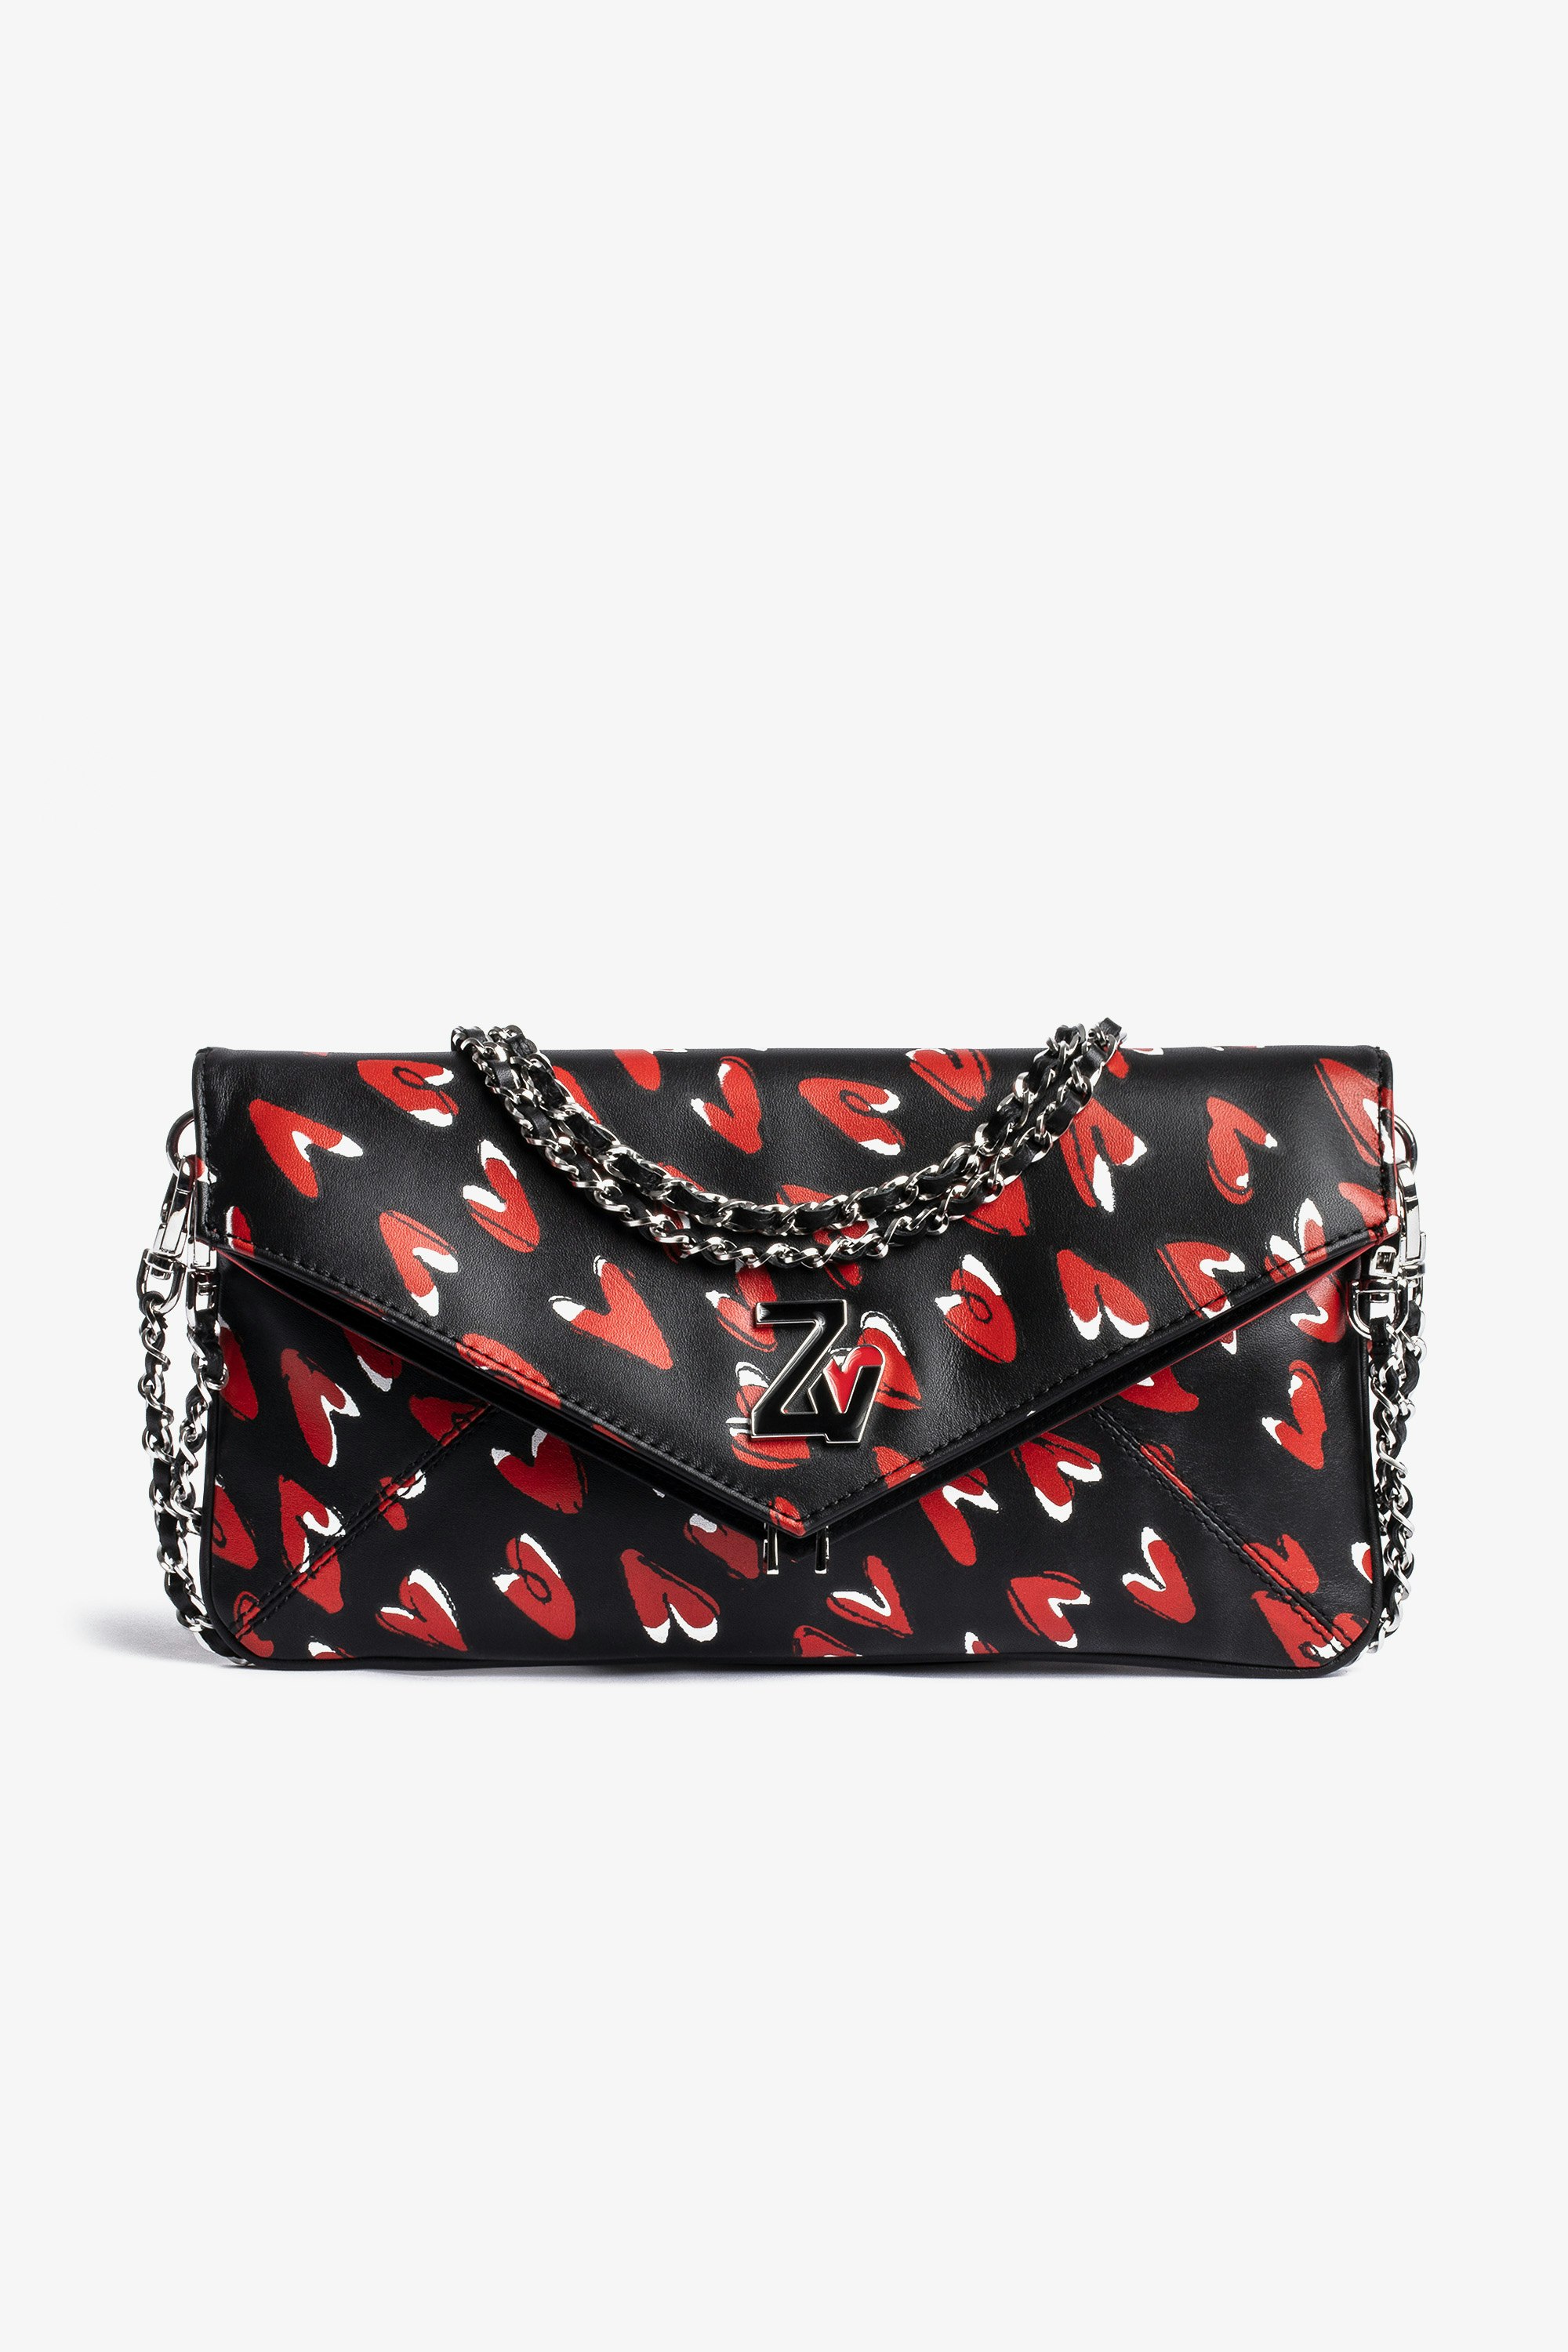 Rockeur Clutch Women’s clutch bag in black grained leather with heart pattern